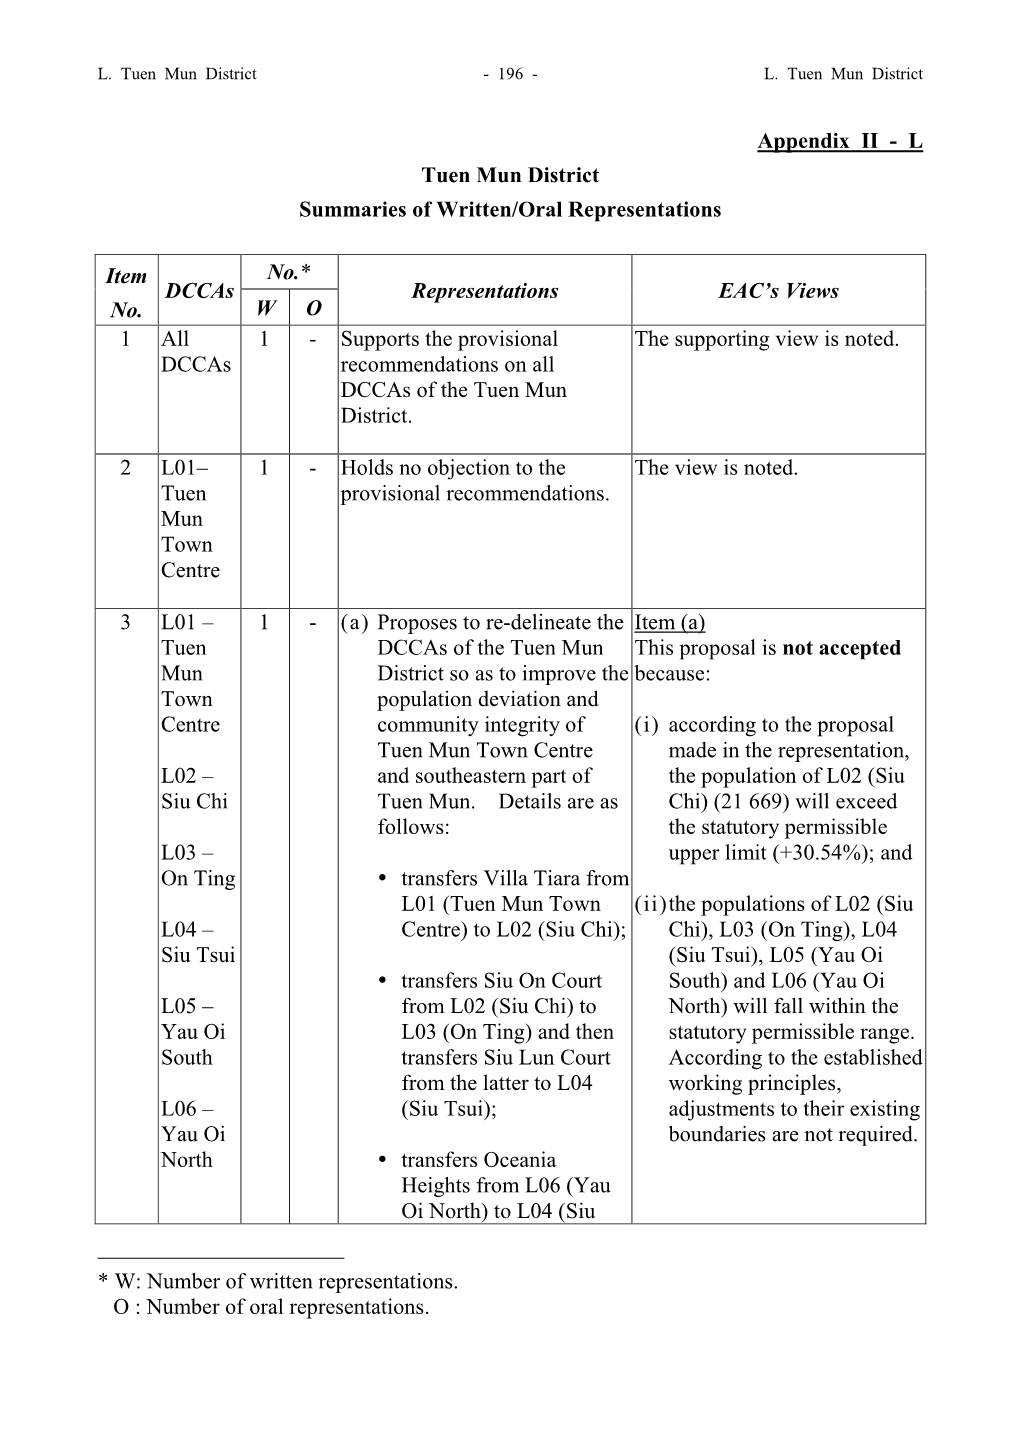 Appendix II - L Tuen Mun District Summaries of Written/Oral Representations